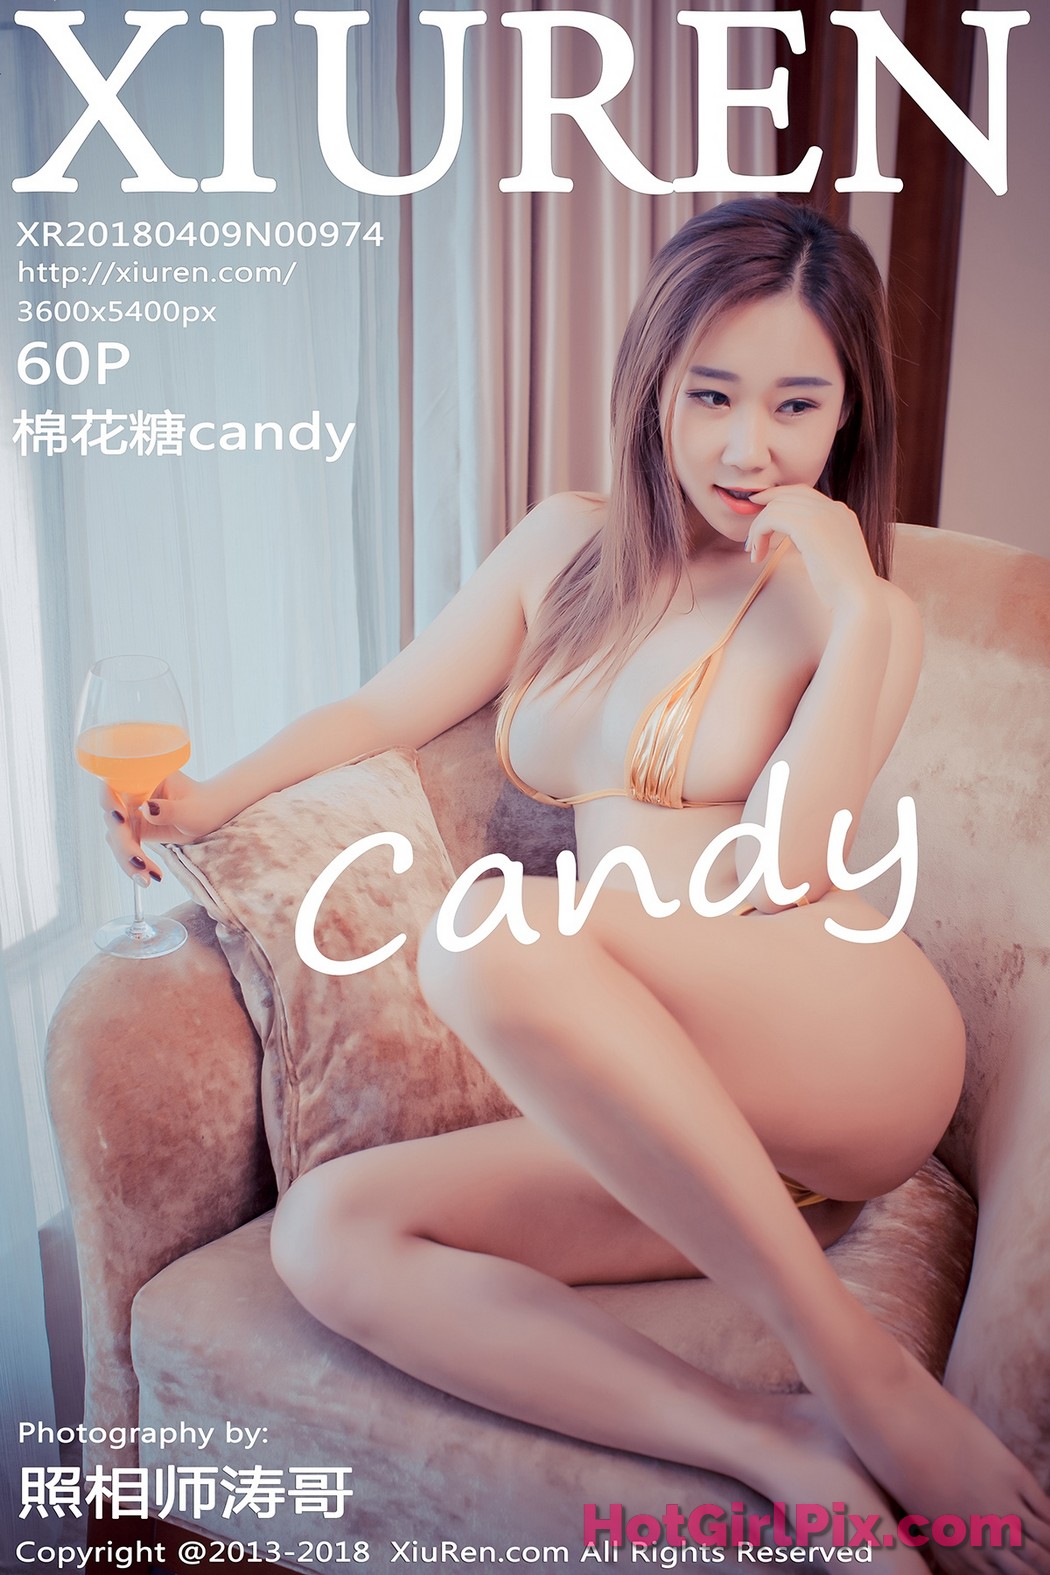 [XIUREN] No.974 棉花糖candy